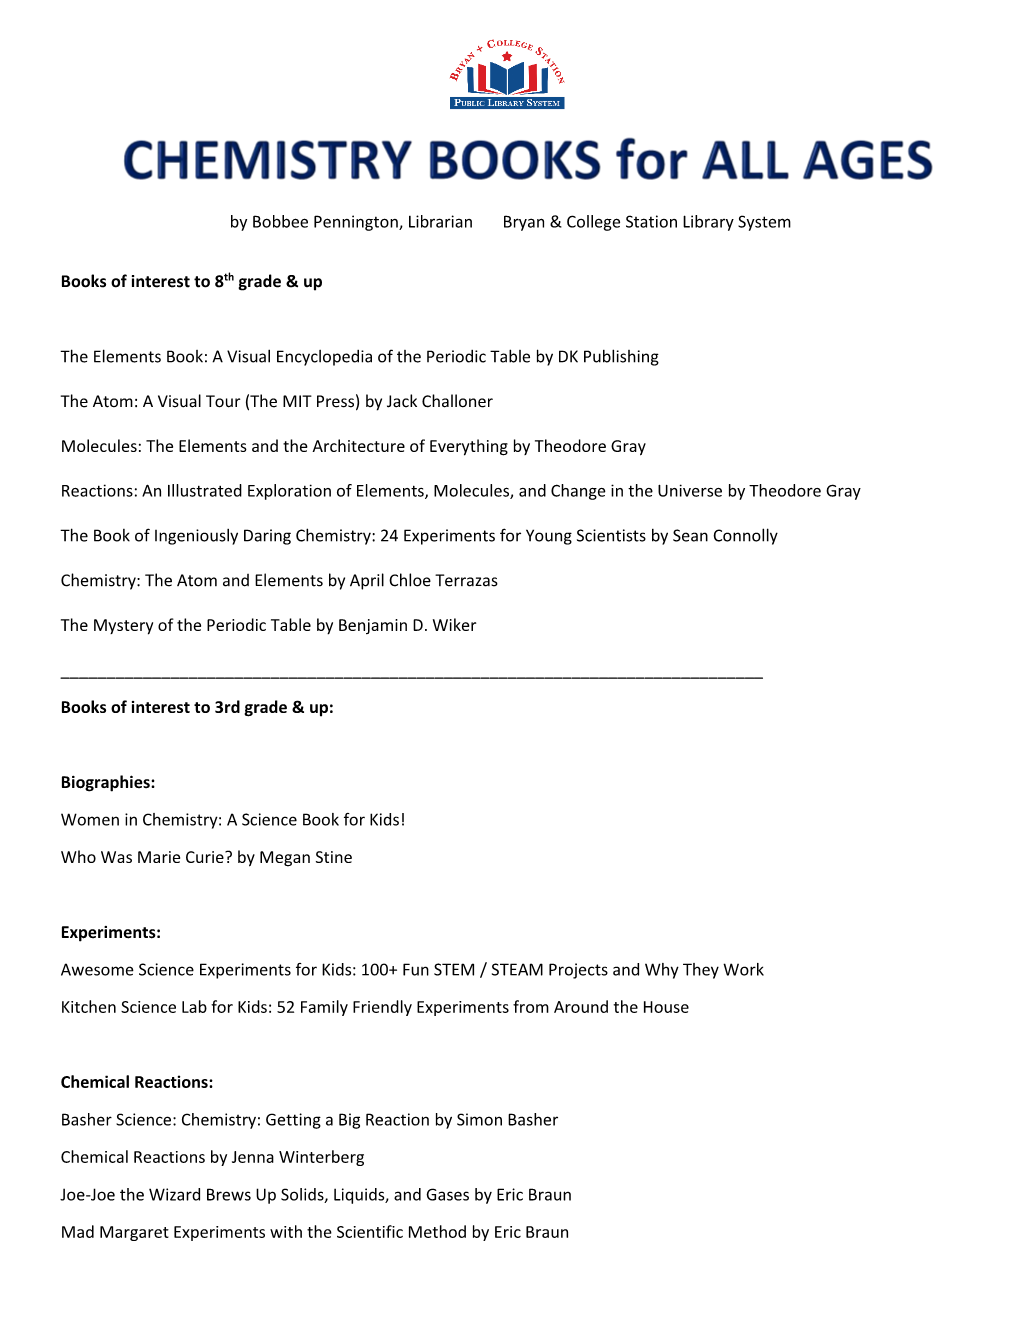 Chemistry Books for Kids (Pdf)